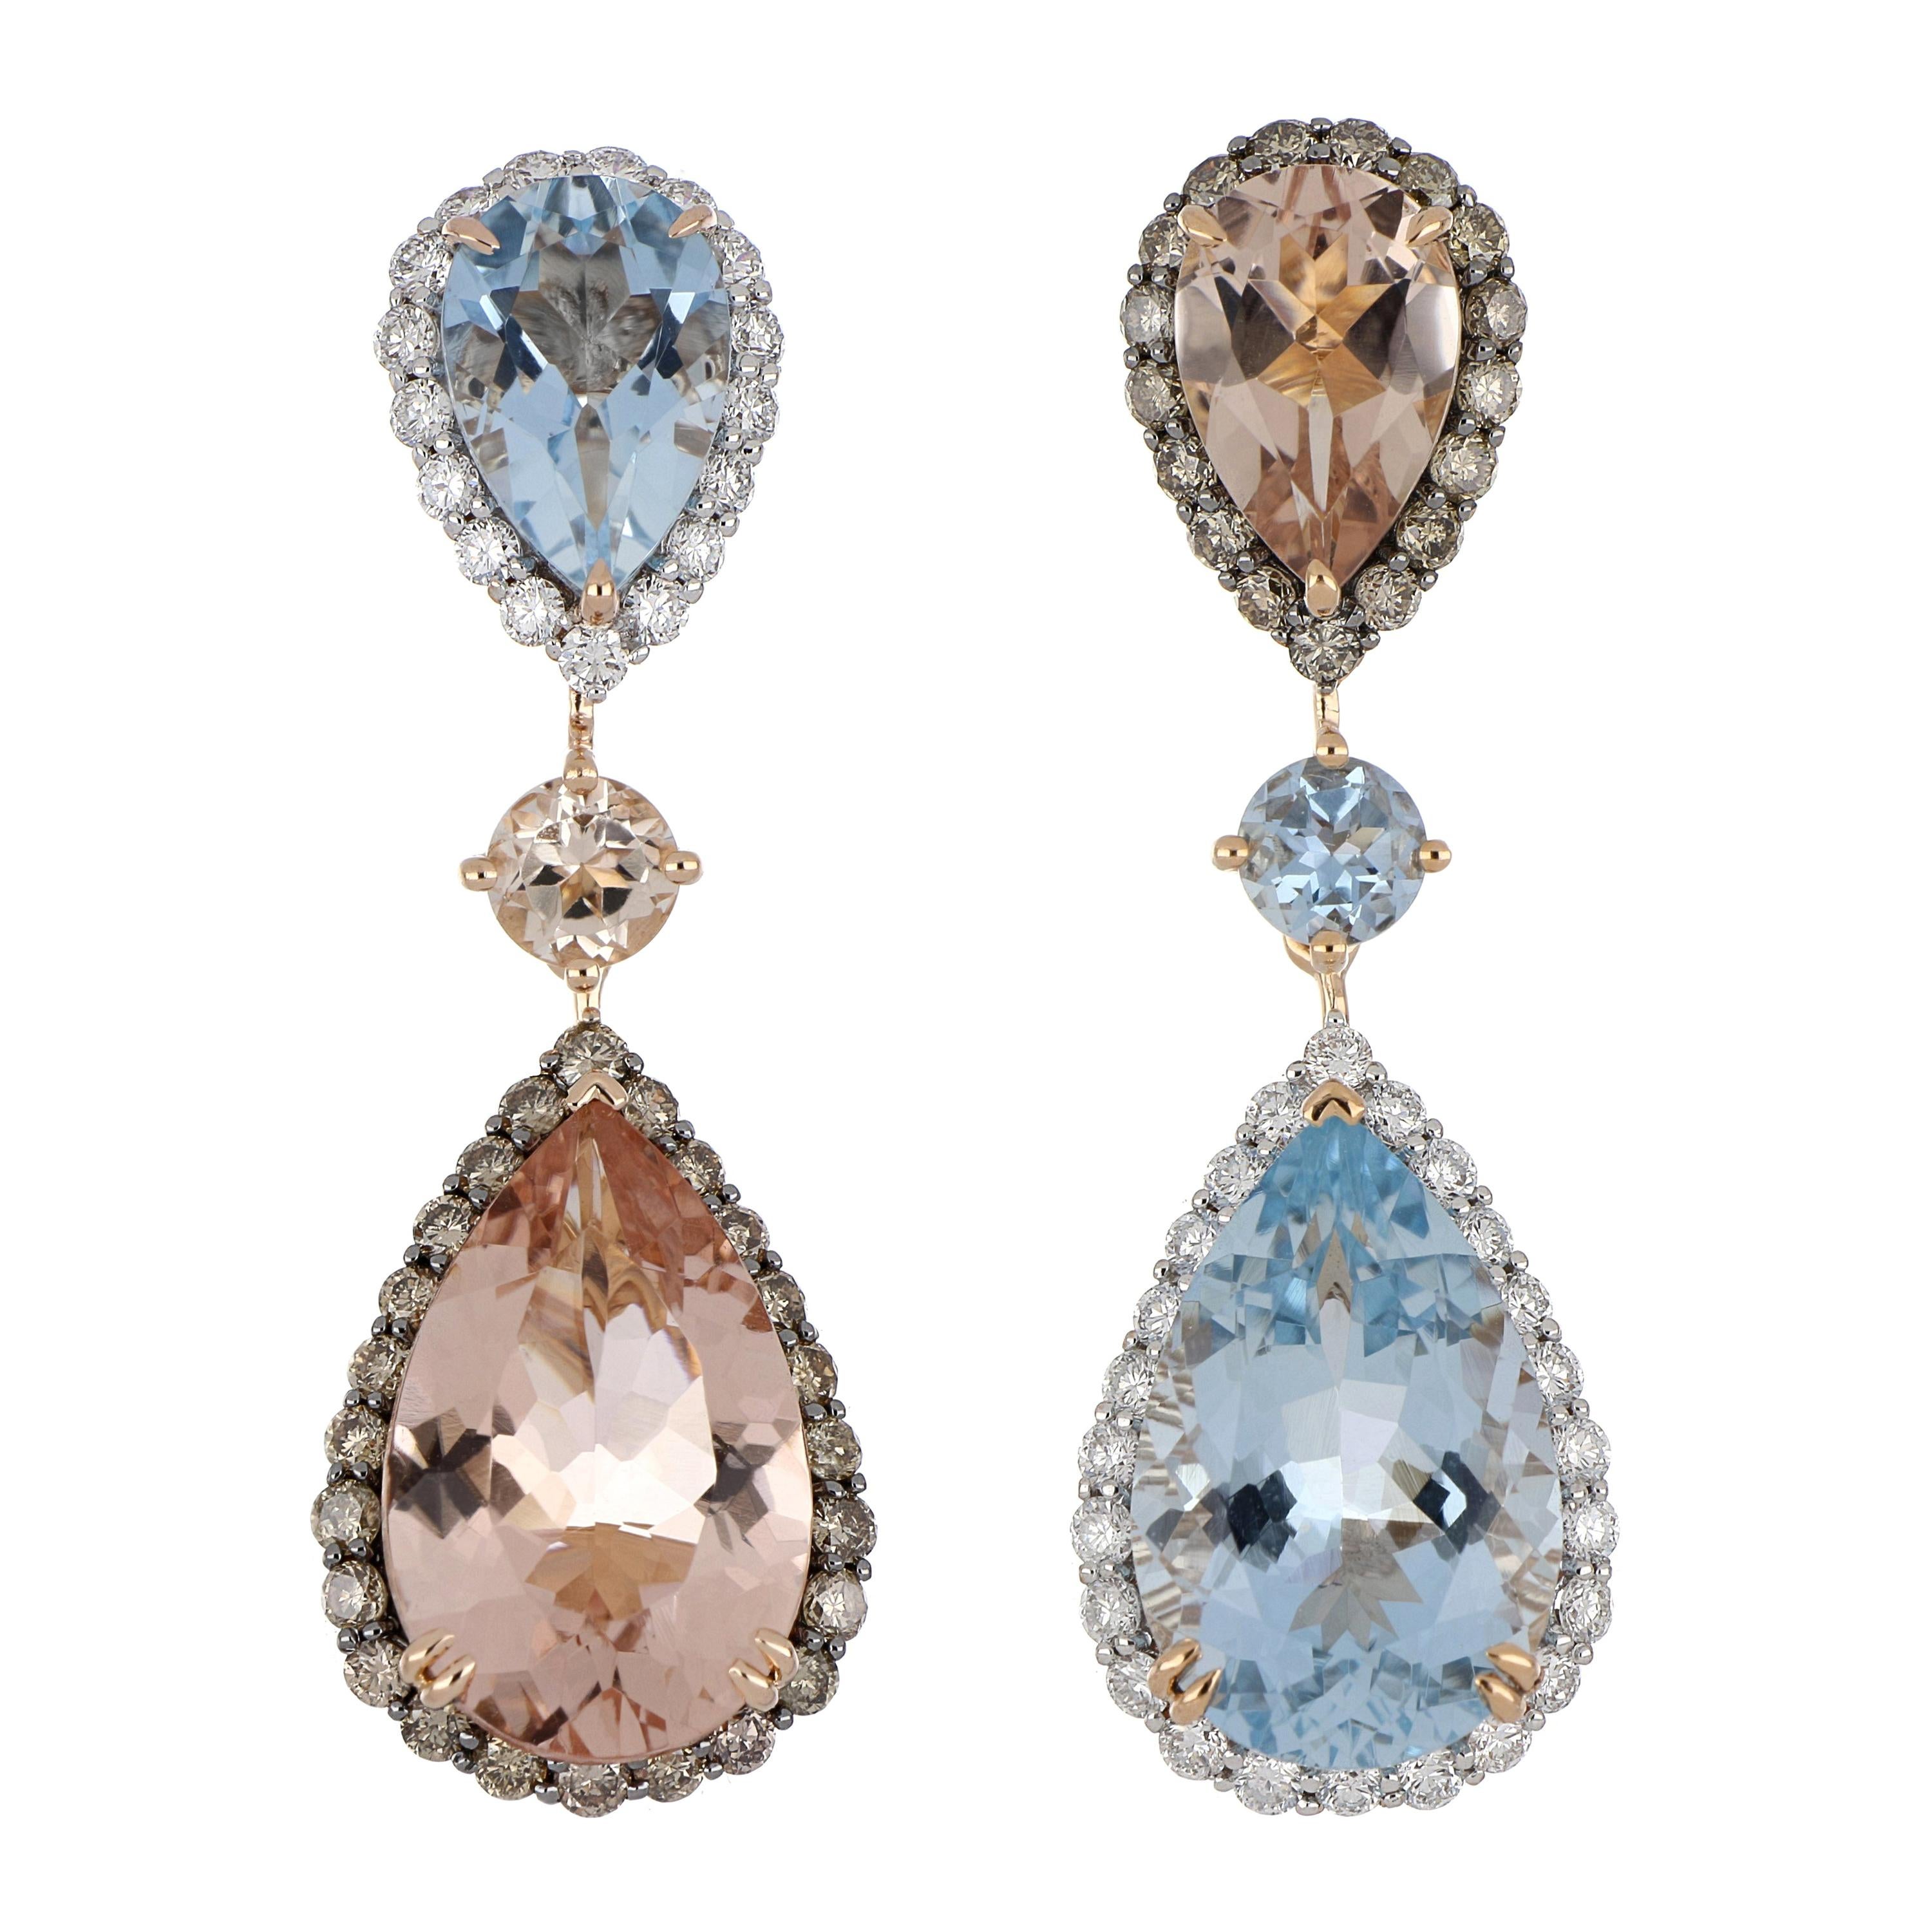 10 Carat Total Morganite and Aquamarine Earring with Diamonds in 18 Karat Gold